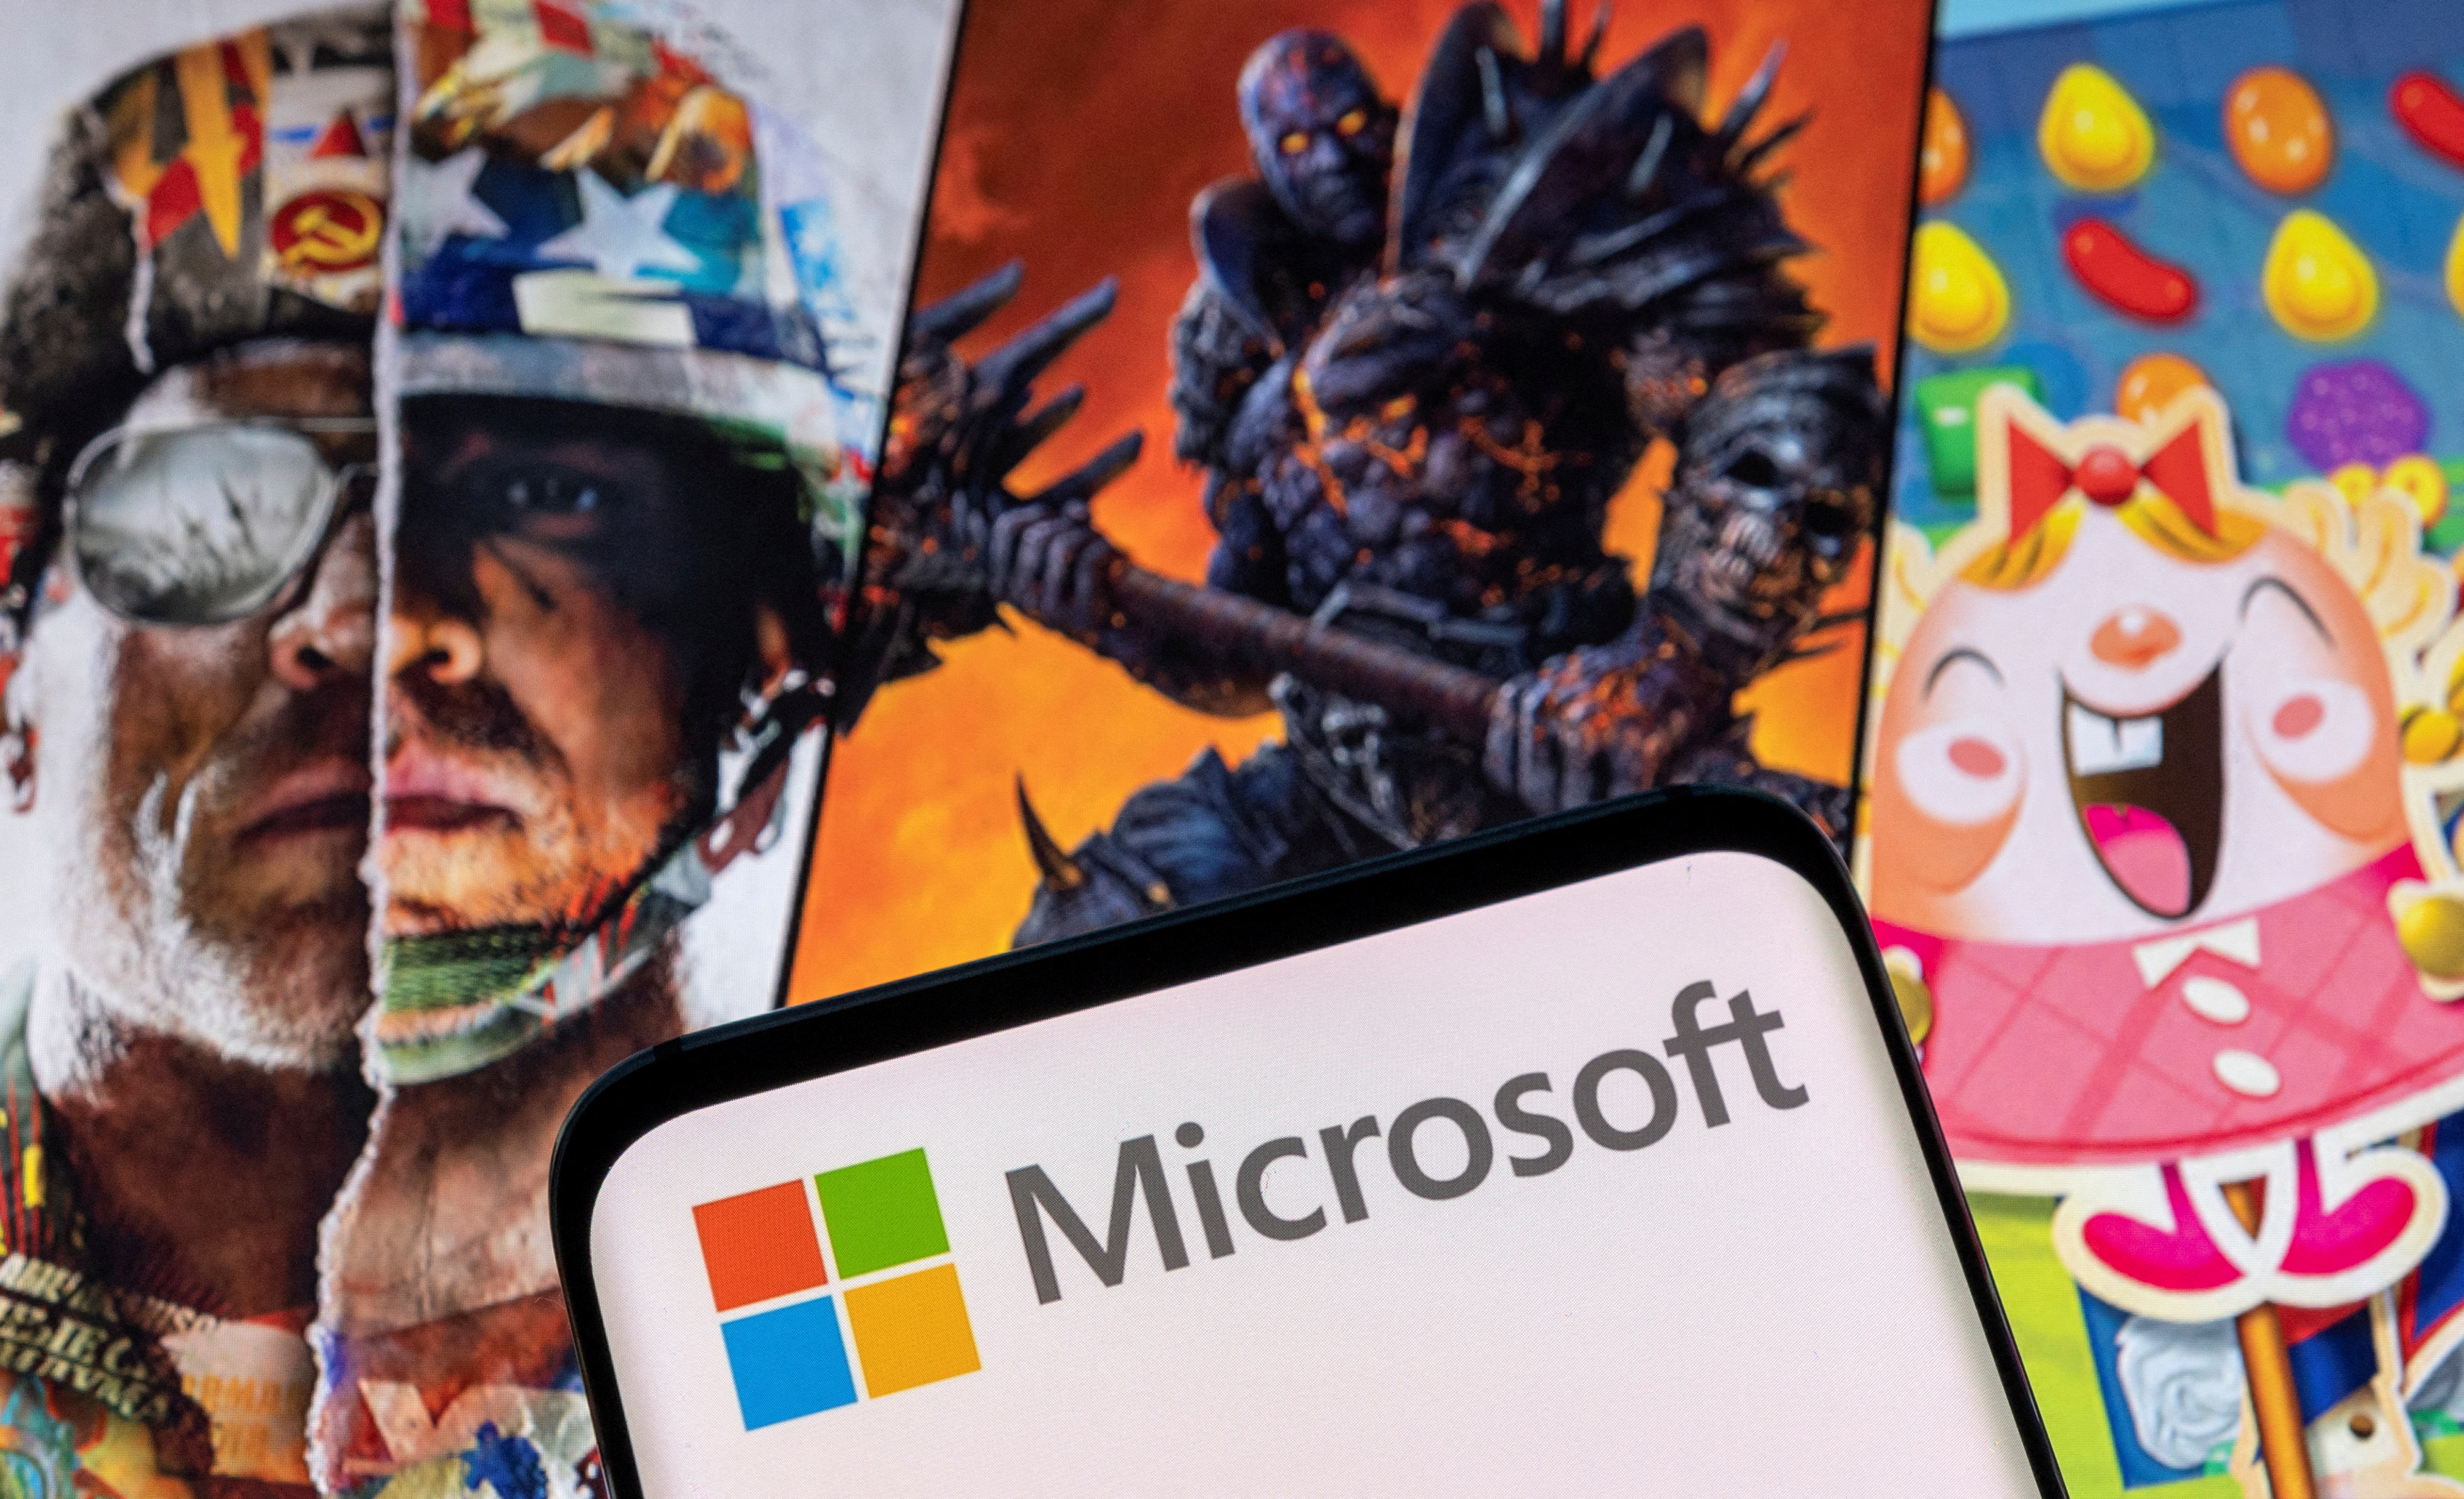 UK CMA Extends Microsoft Activision Blizzard Acquisition